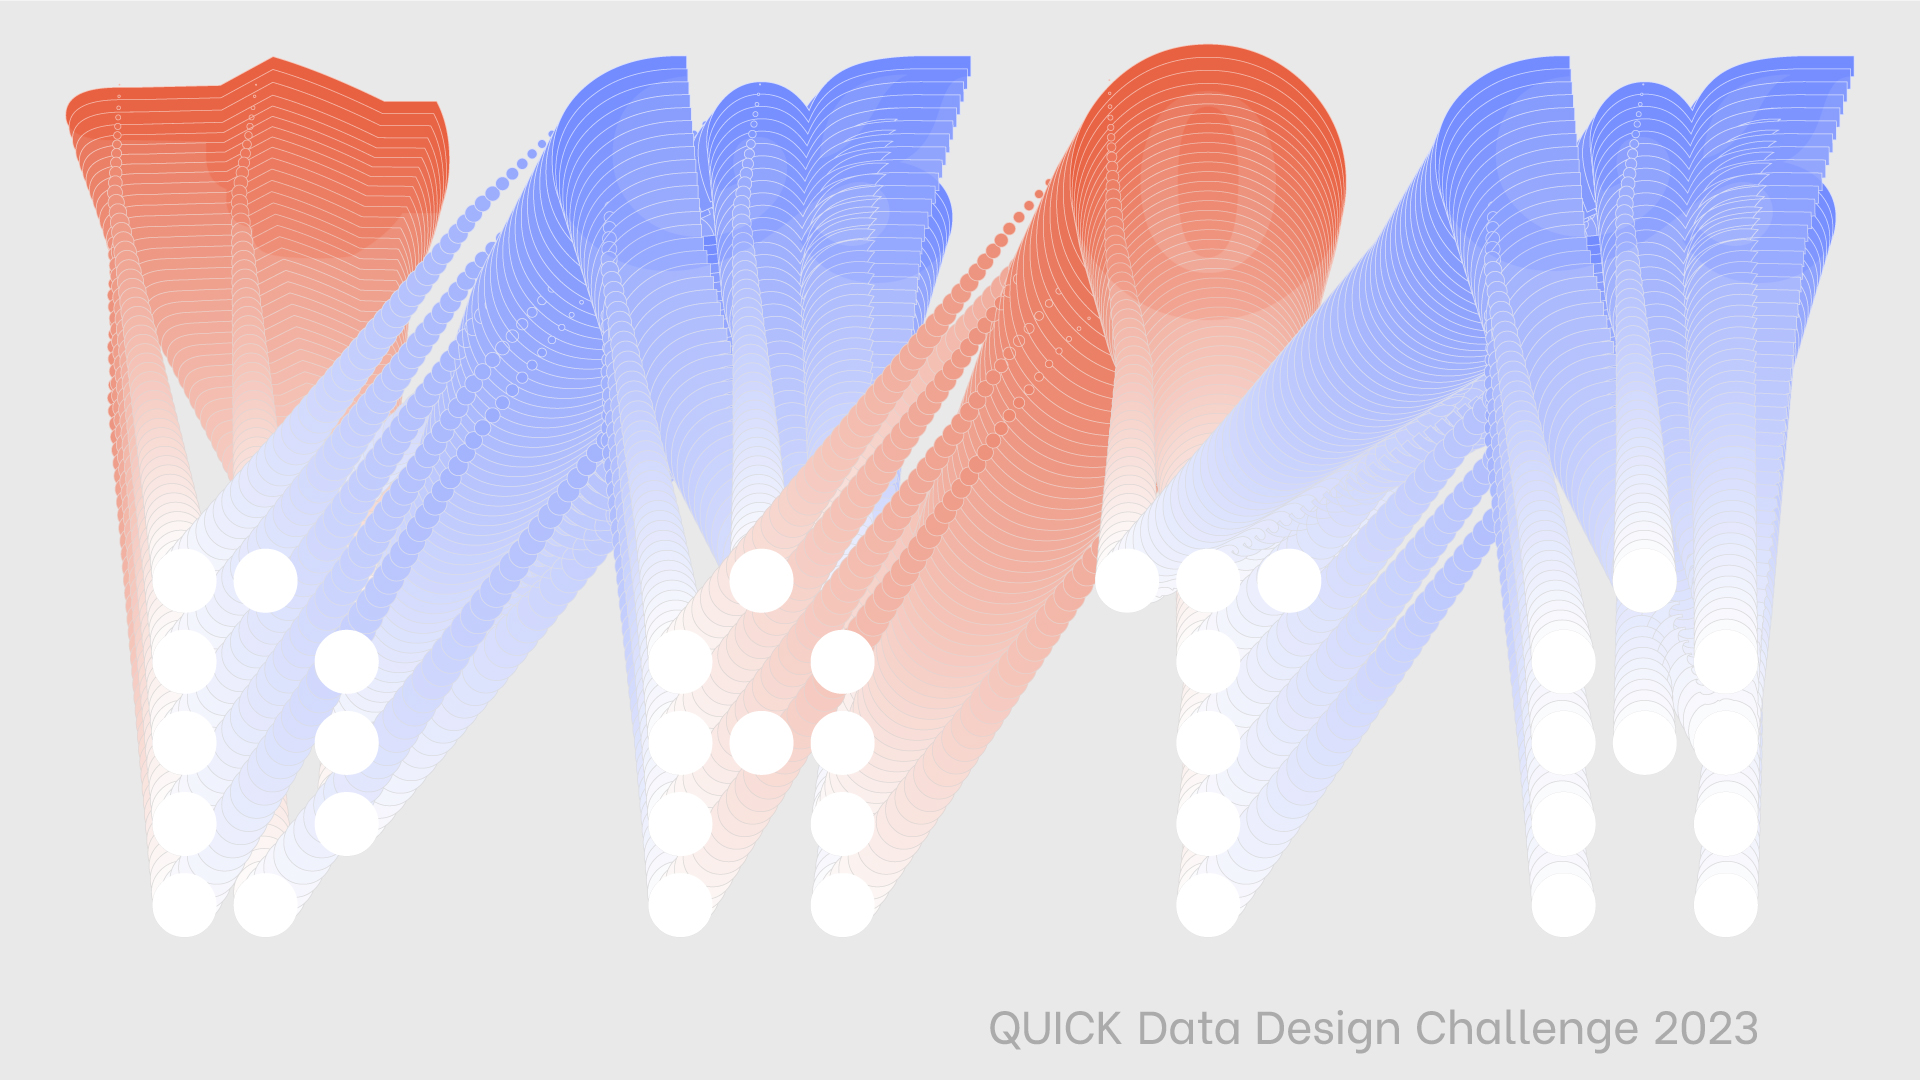 
QUICK Data Design Challenge 2023